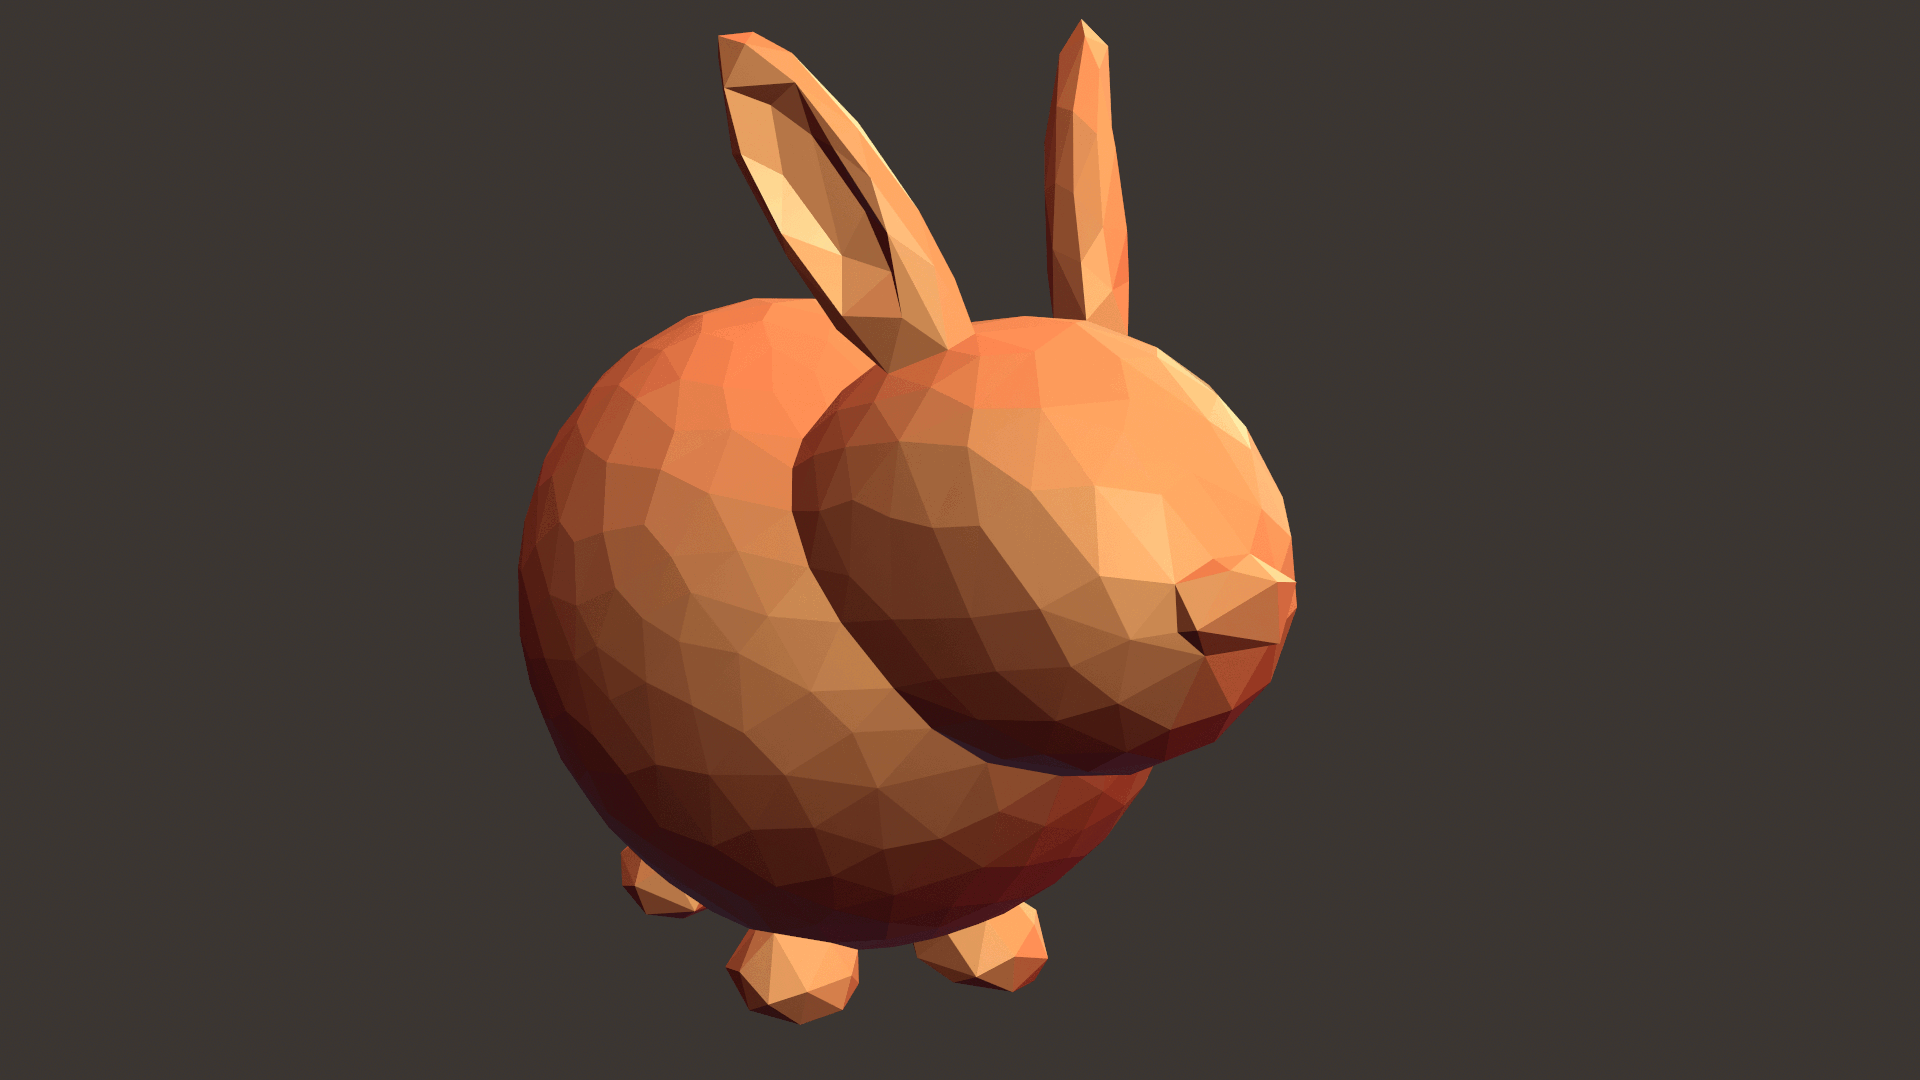 A low-poly rabbit